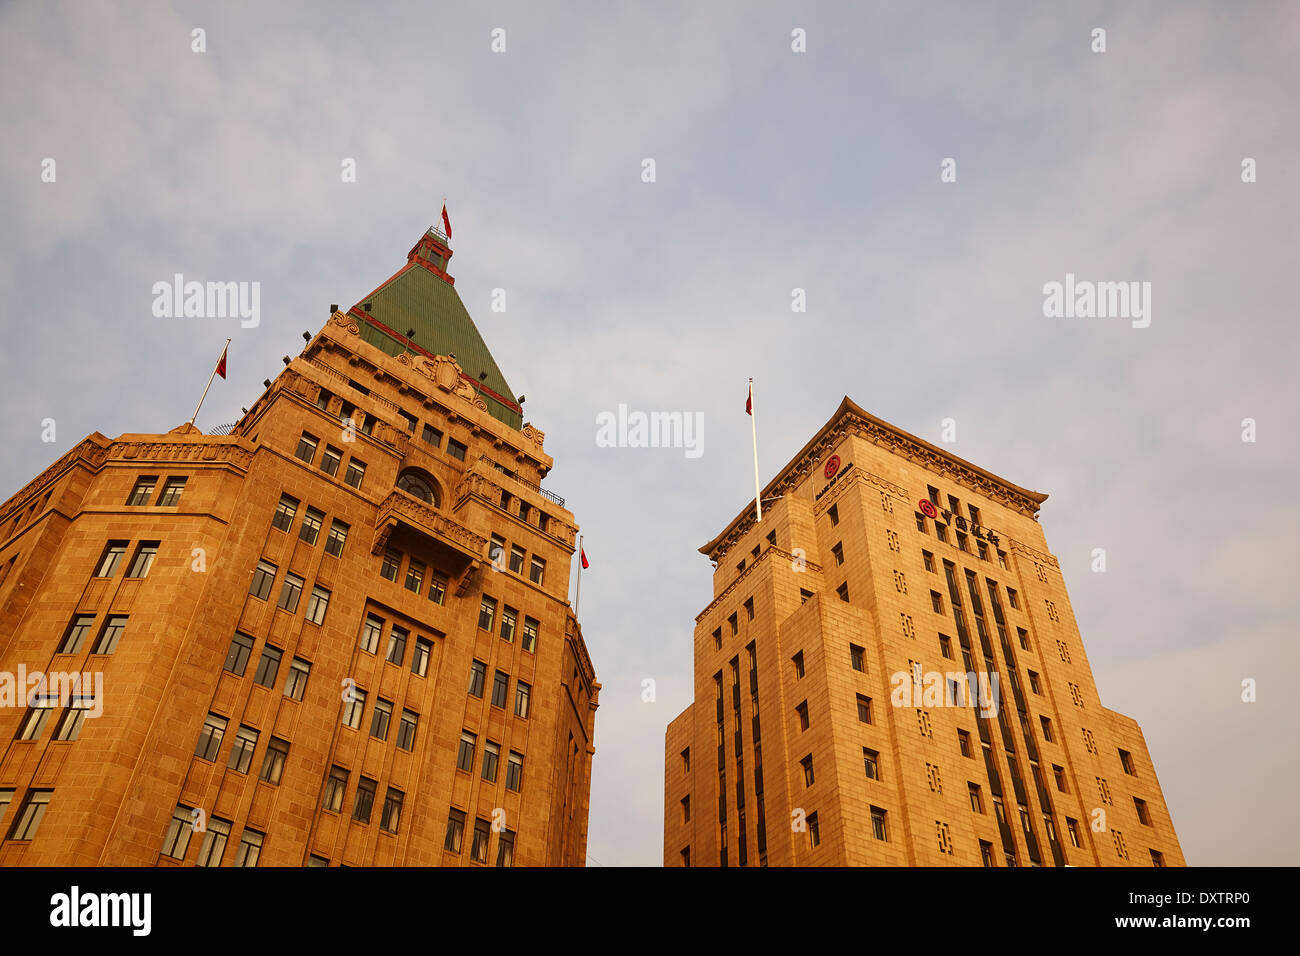 Bank of China Building (rechts) und das Peace Hotel, zwei historische Gebäude mit Kultstatus am Flussufer Bund, am Huangpu-Fluss, Shanghai, China. Stockfoto